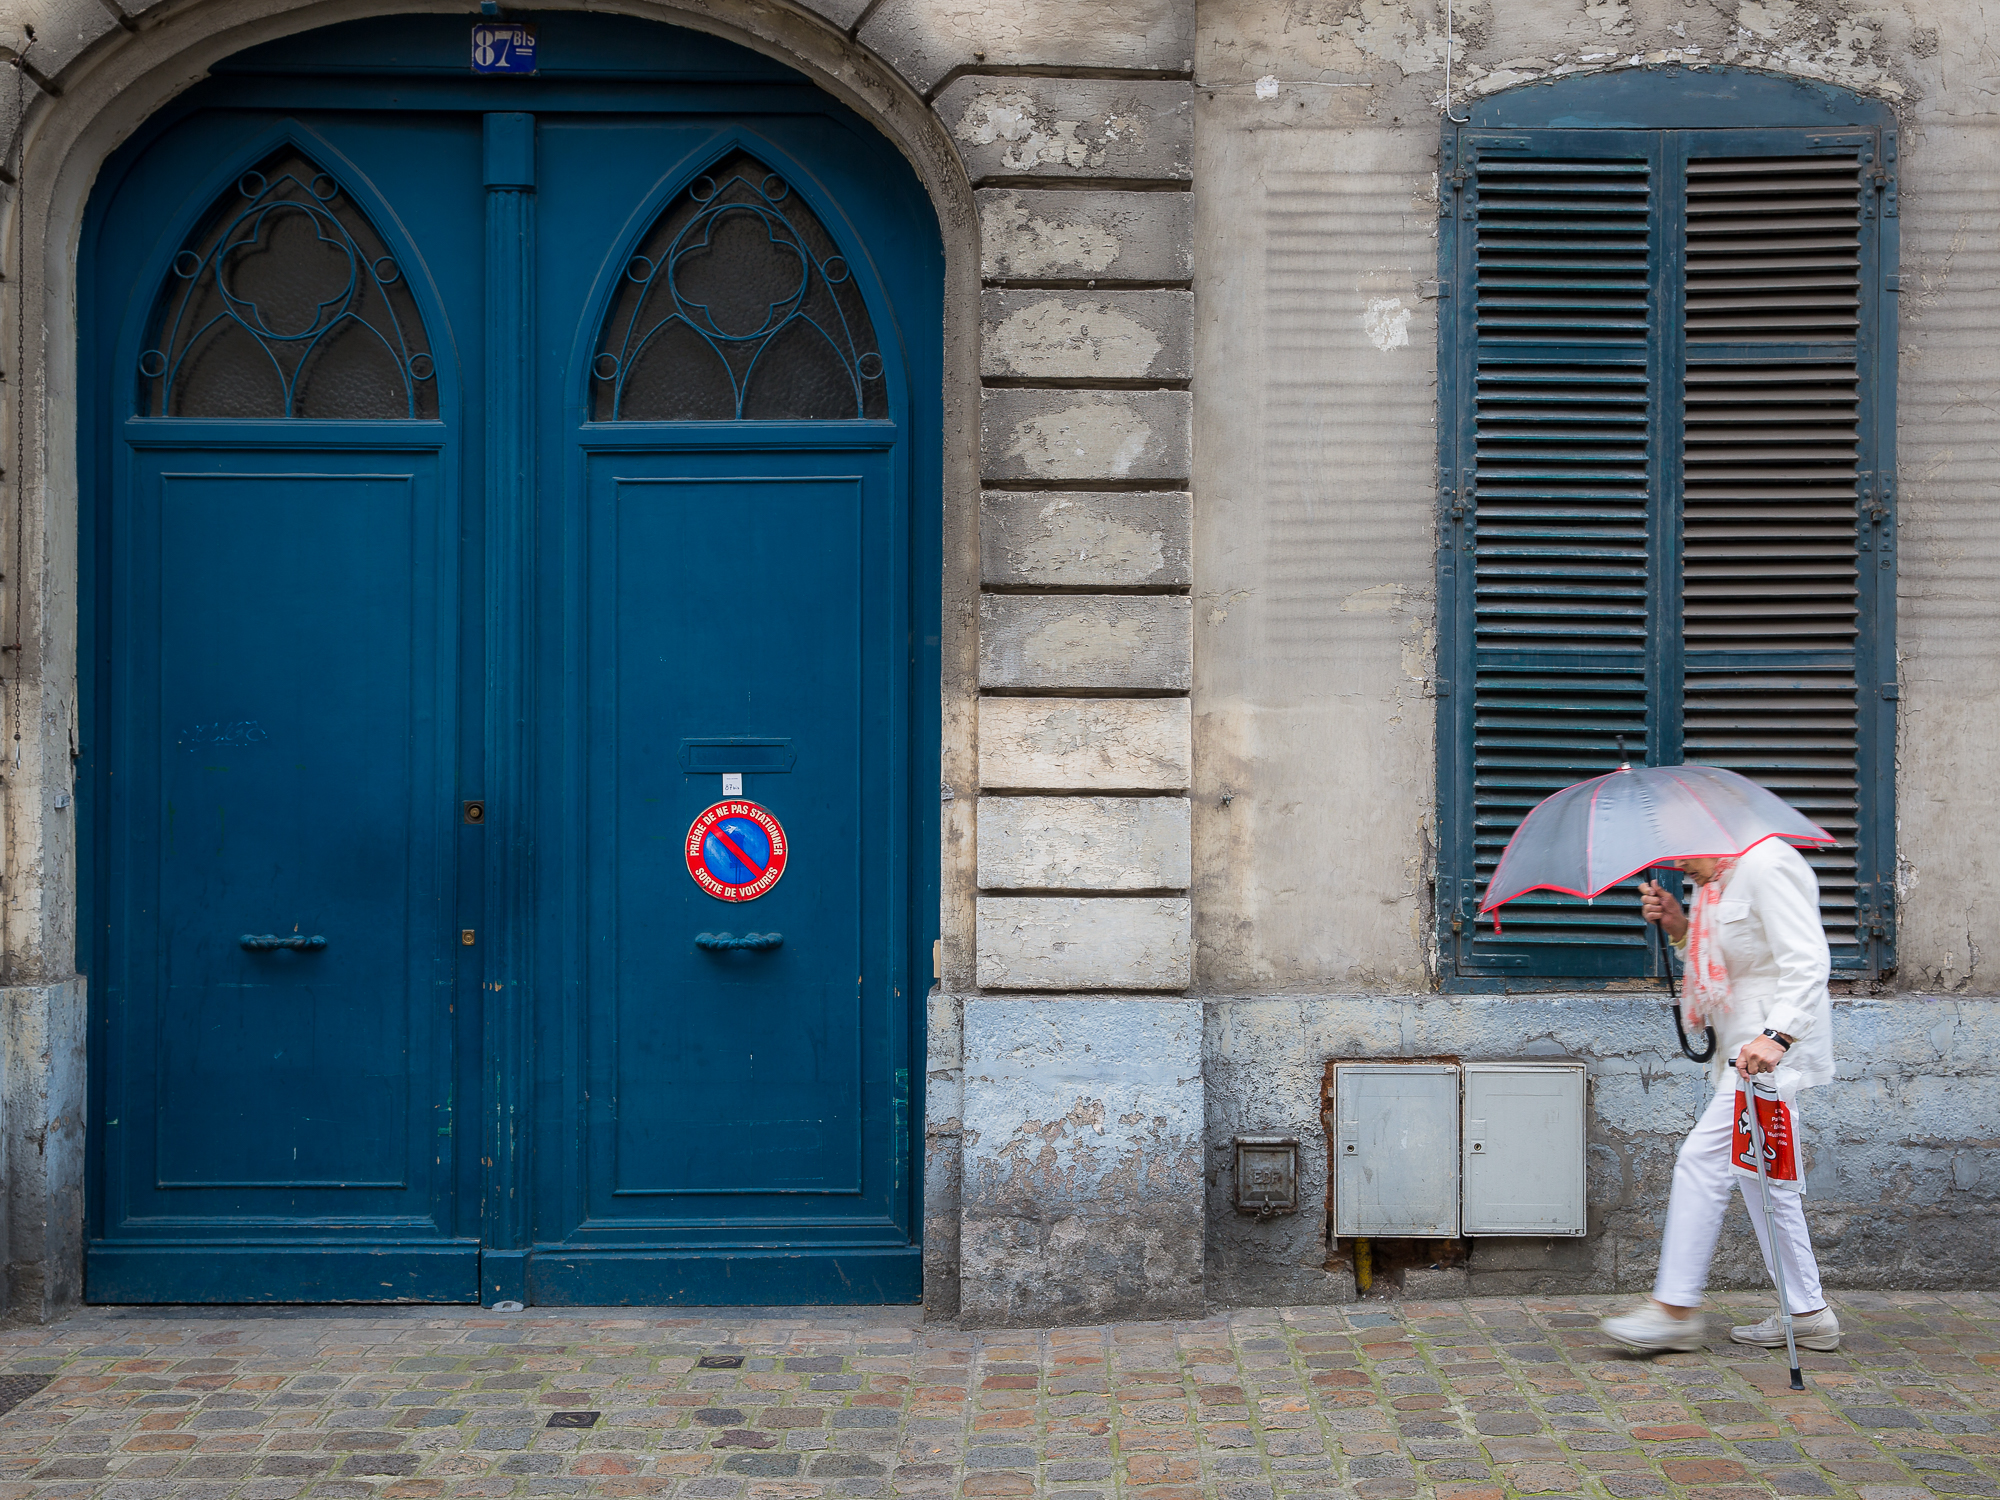 Lady walks across blue shutters and doors holding umbrella